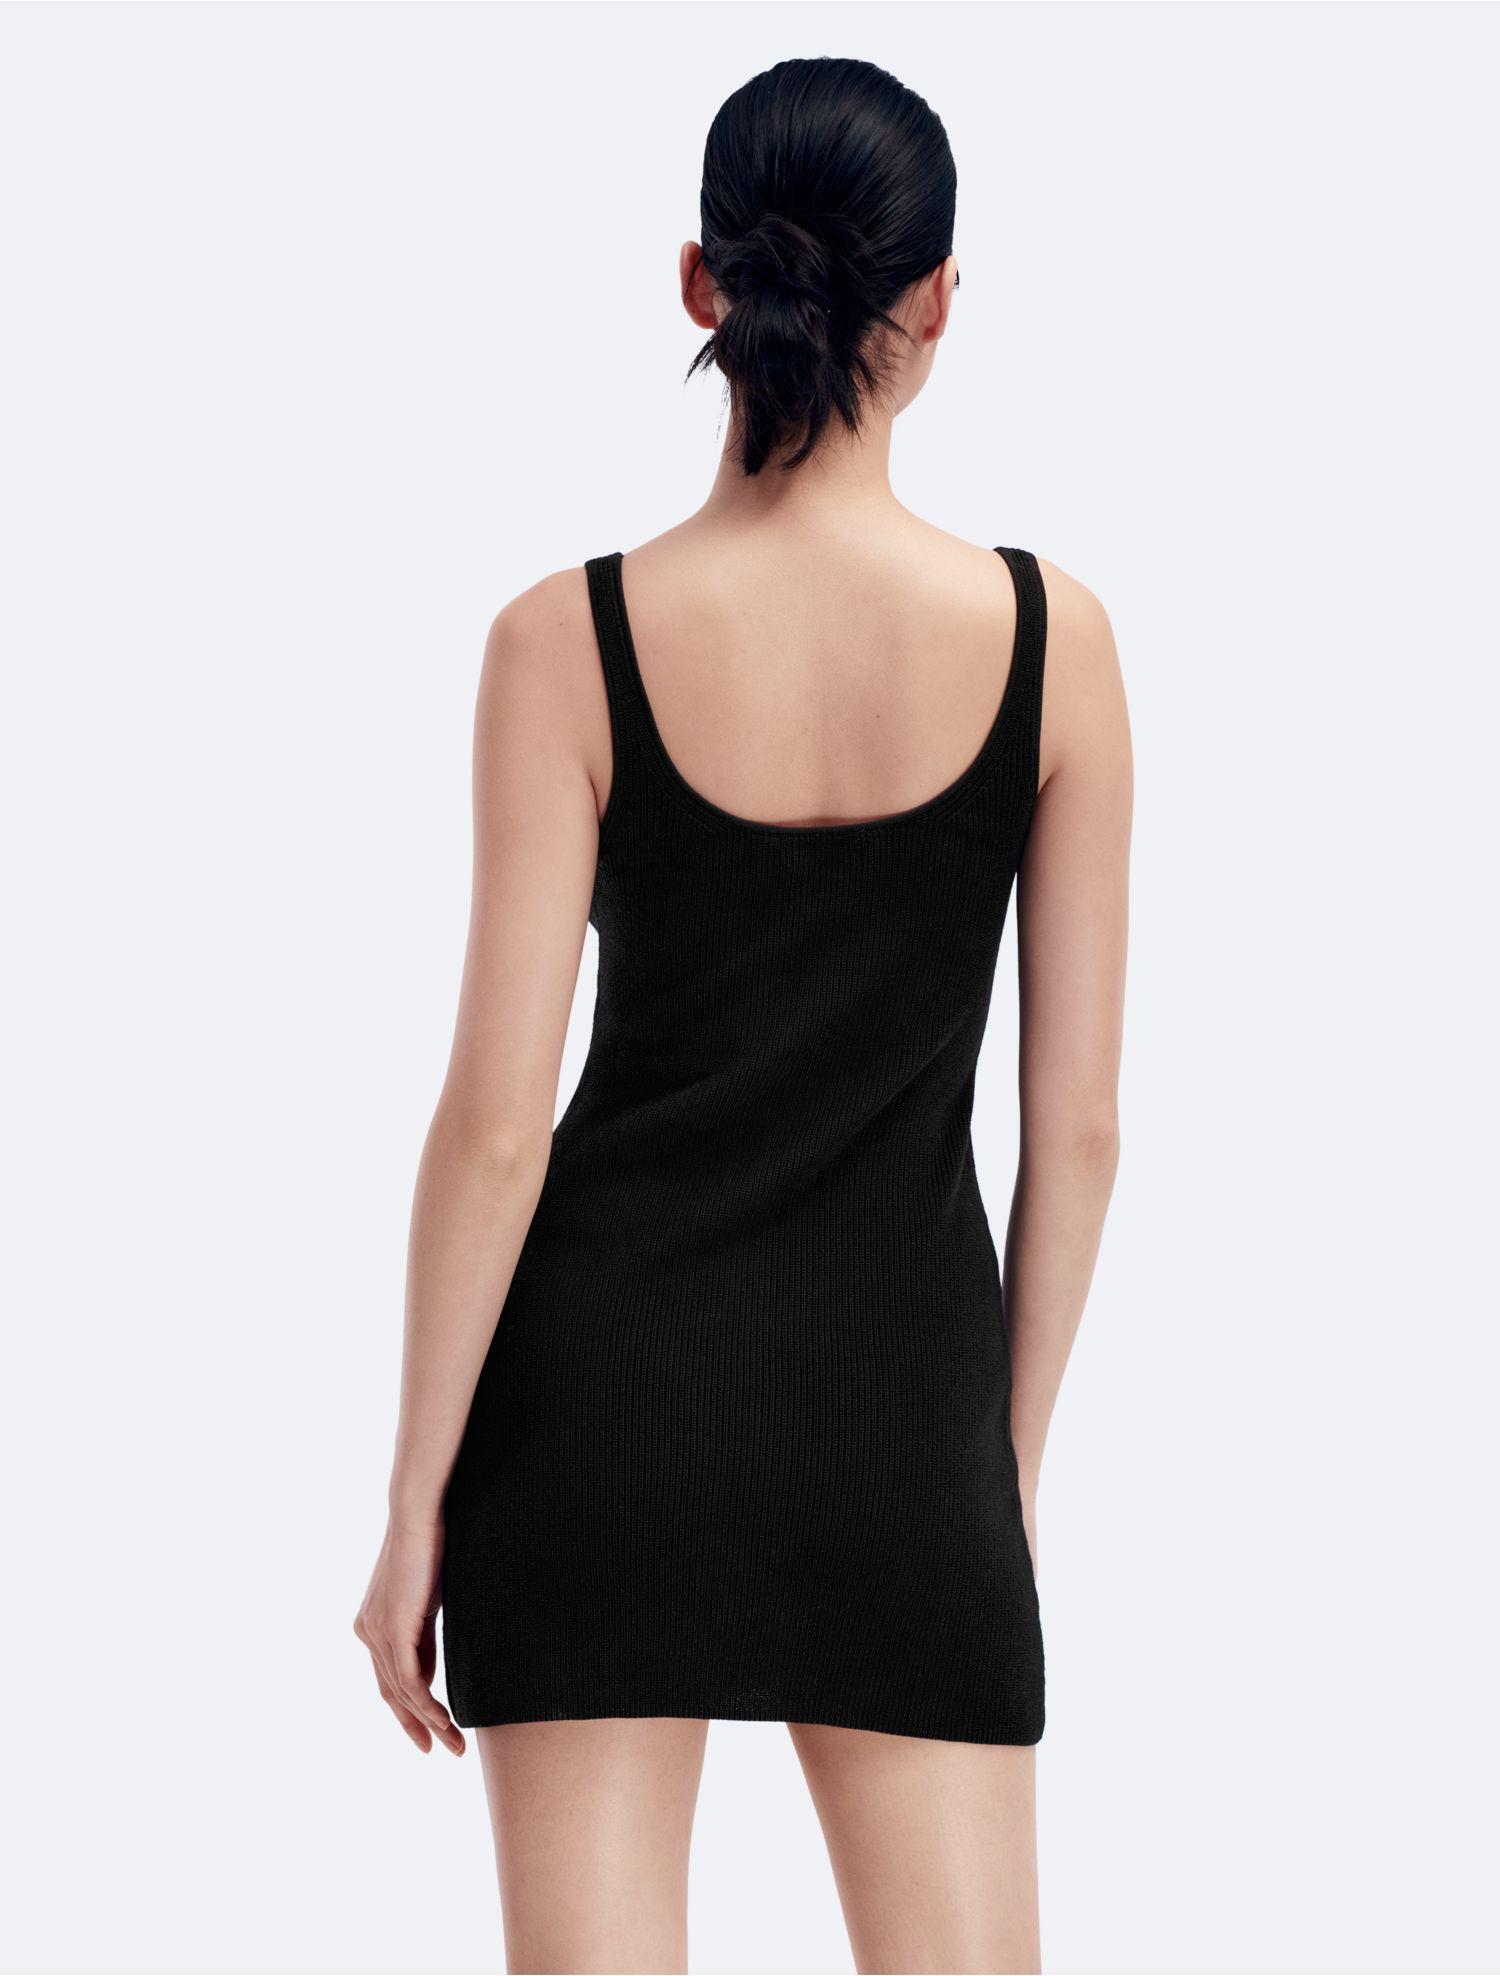 Dress Mini Calvin | Lyst in Klein Knit Black